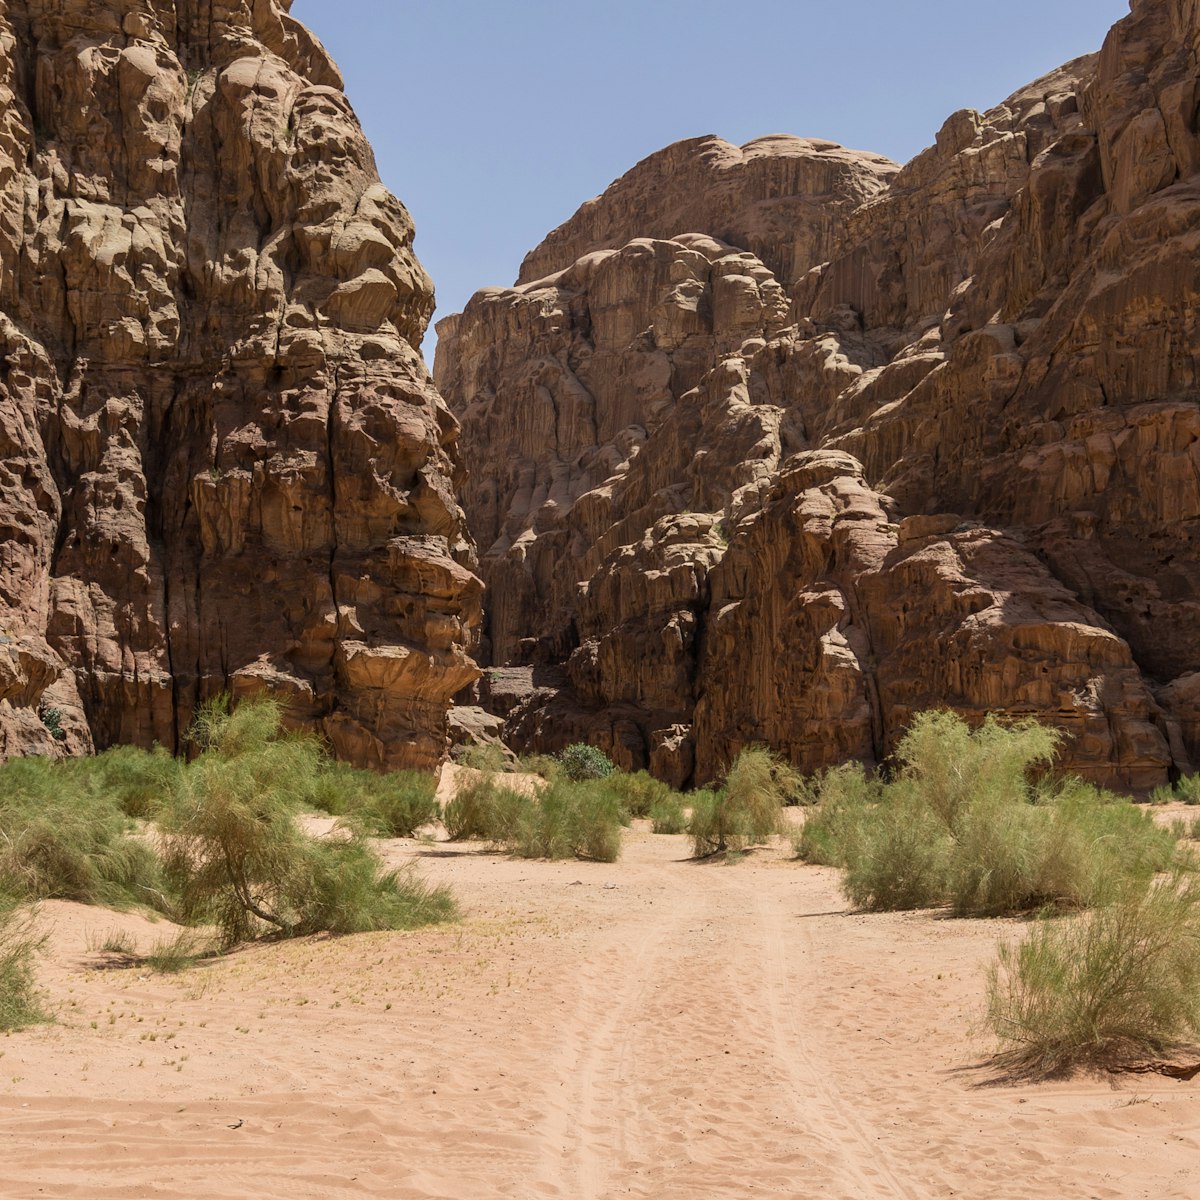 Entrance to Barrah Canyon, Wadi Rum, Jordan.